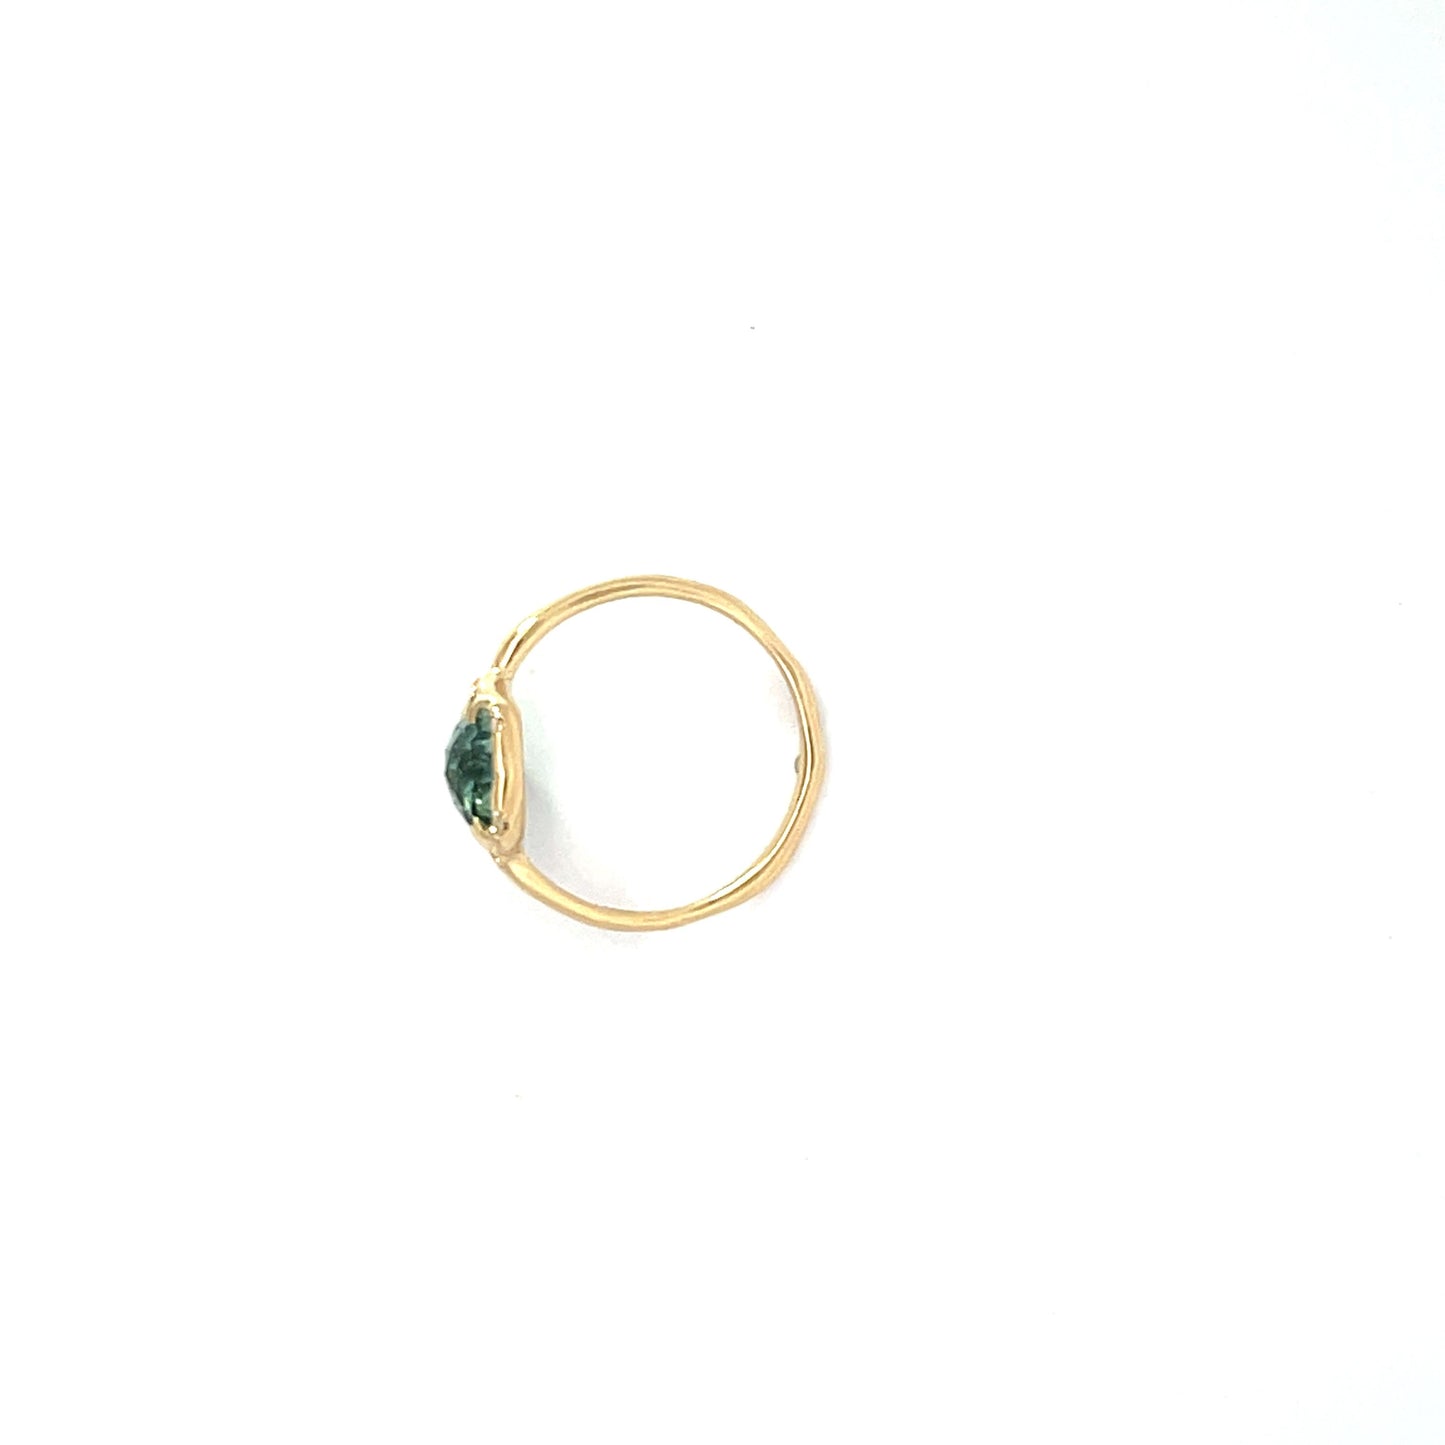 cosmic light ring - seafoam green tourmaline